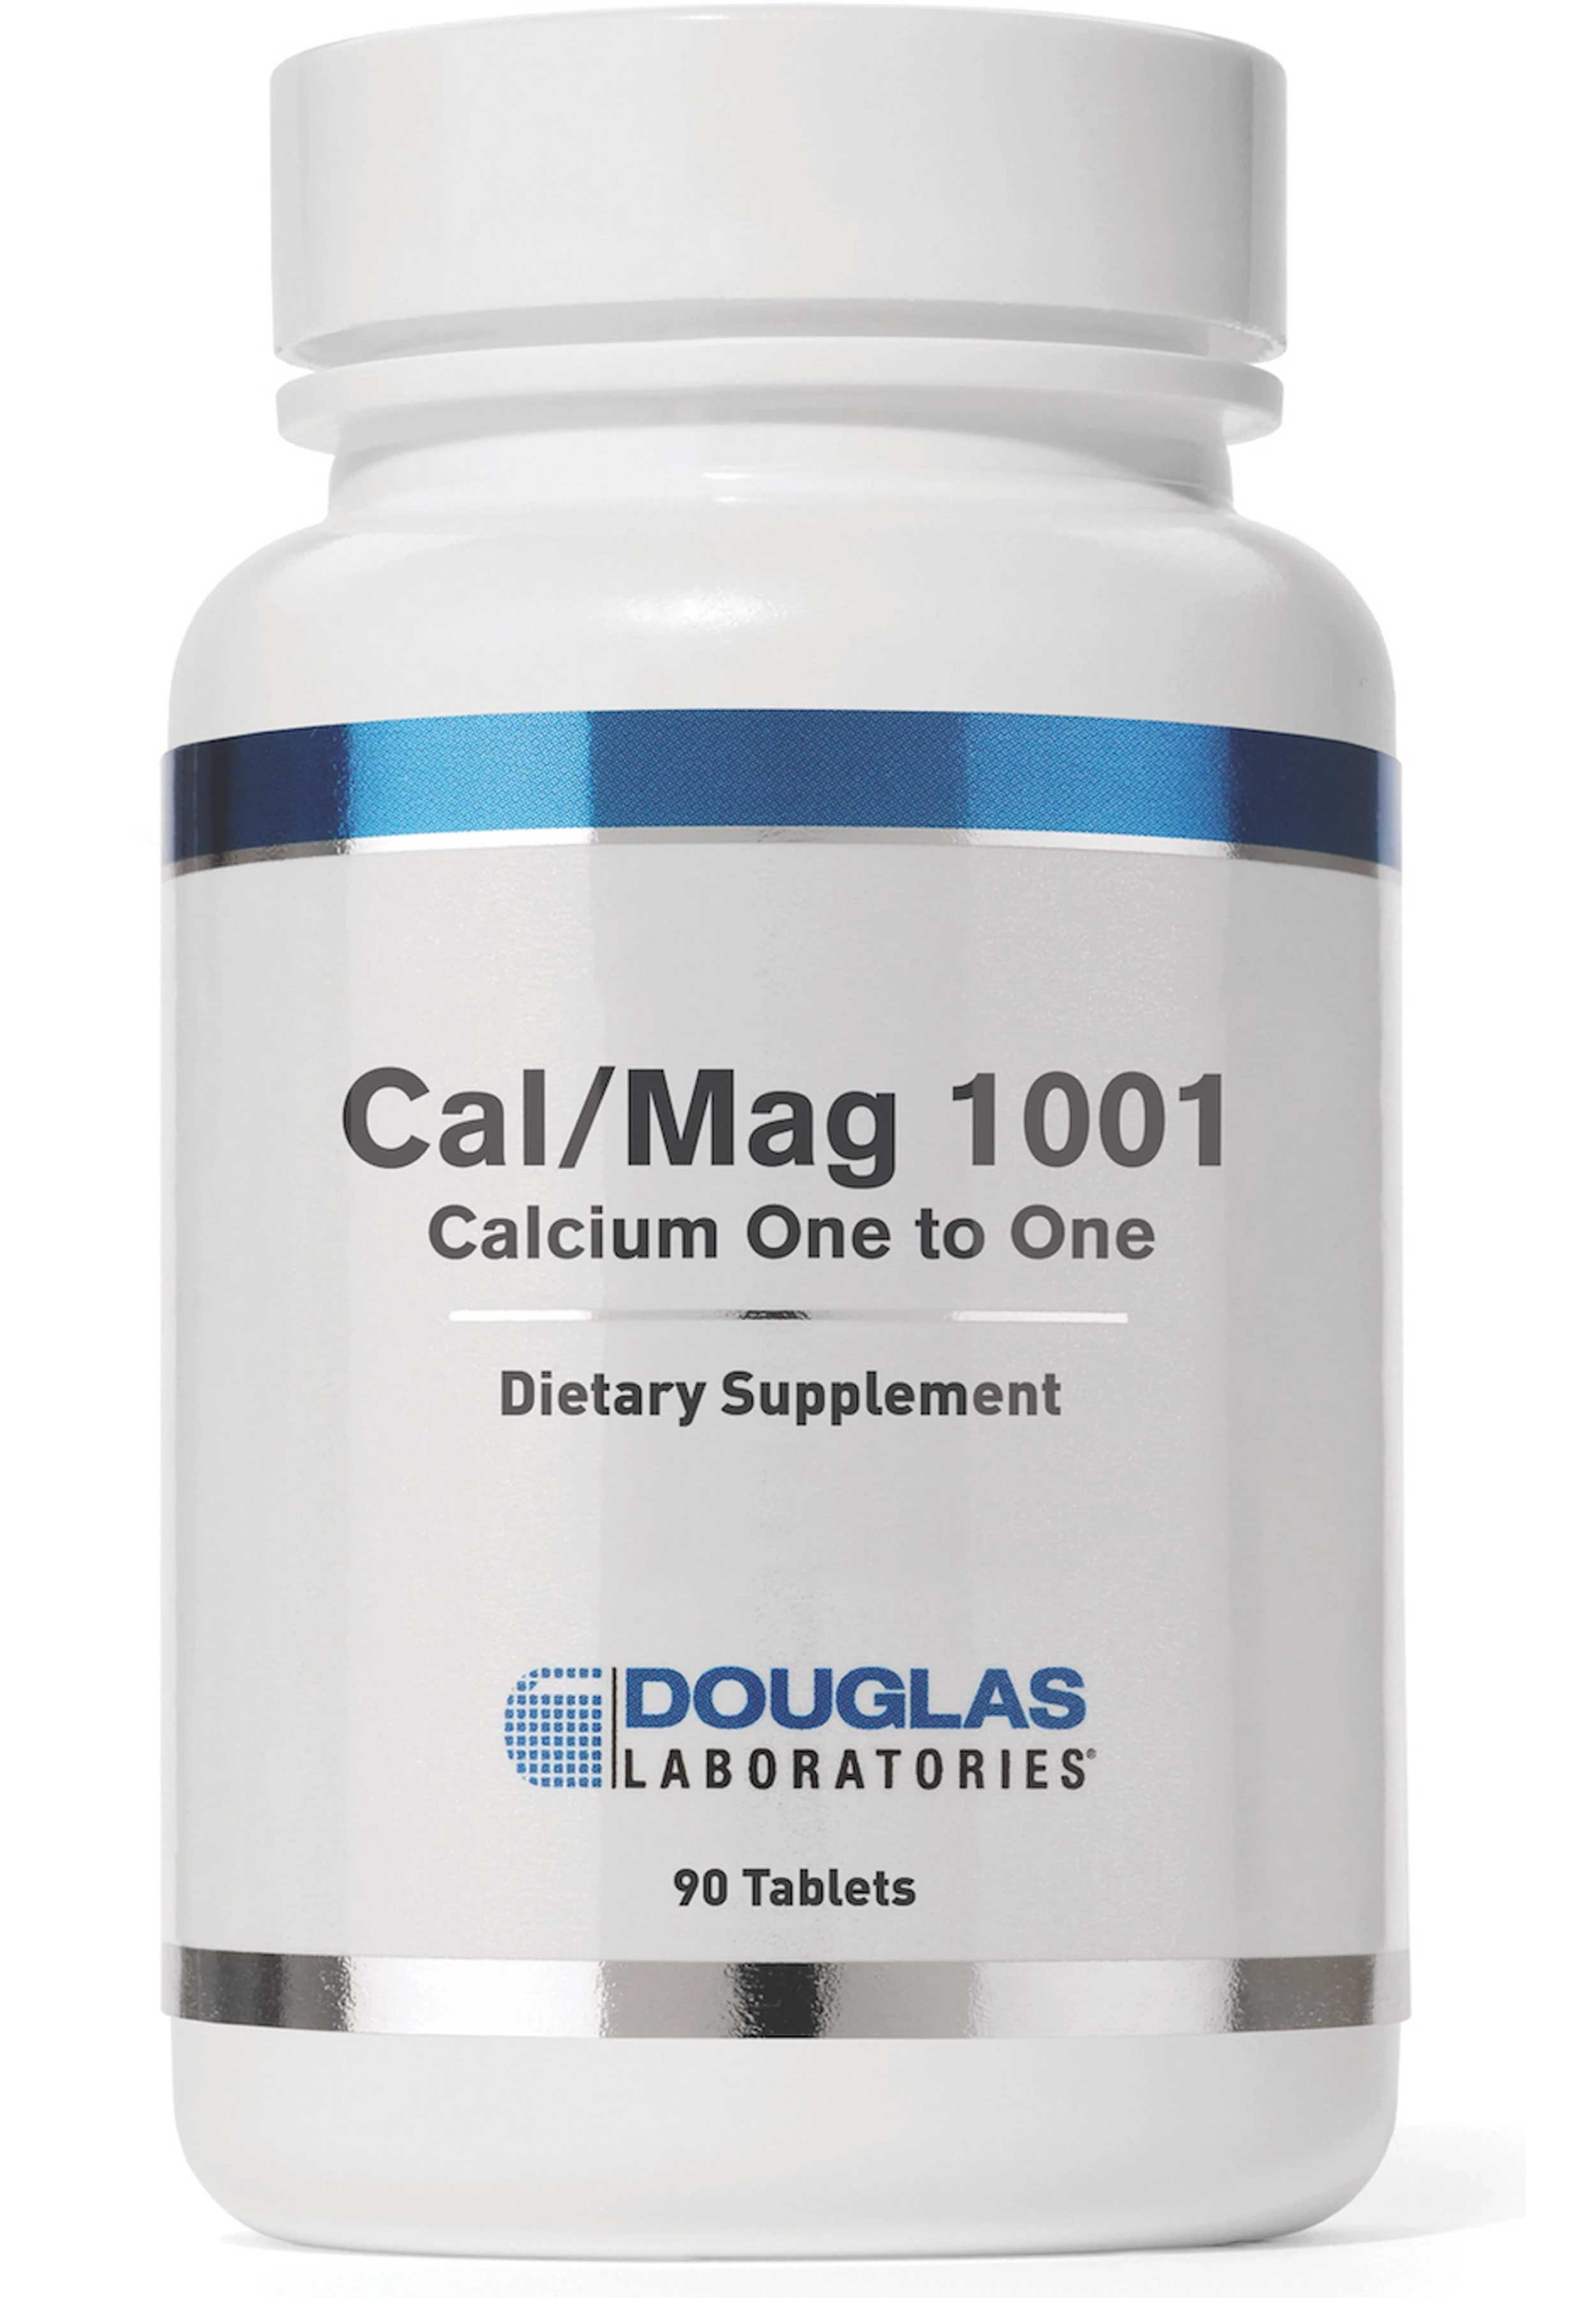 Douglas Laboratories Cal/Mag 1001